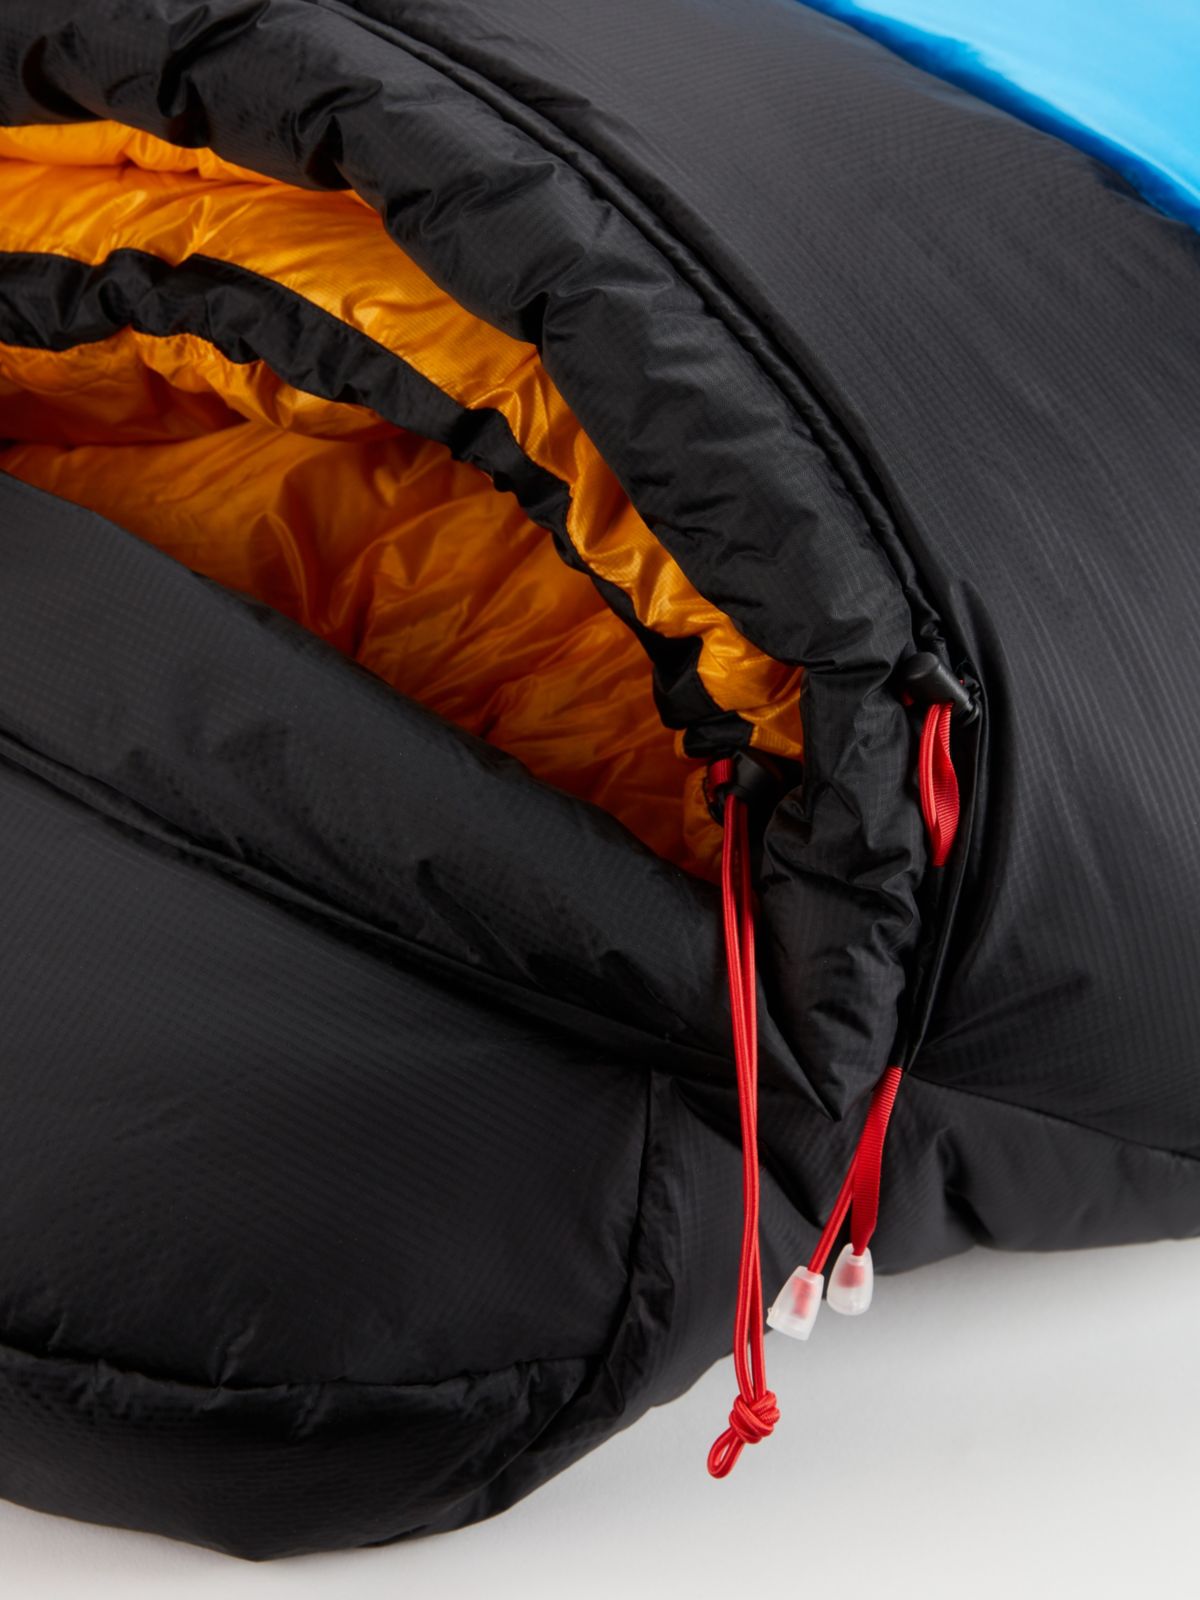 WarmCube™ Expedition -30° Sleeping Bag - Long